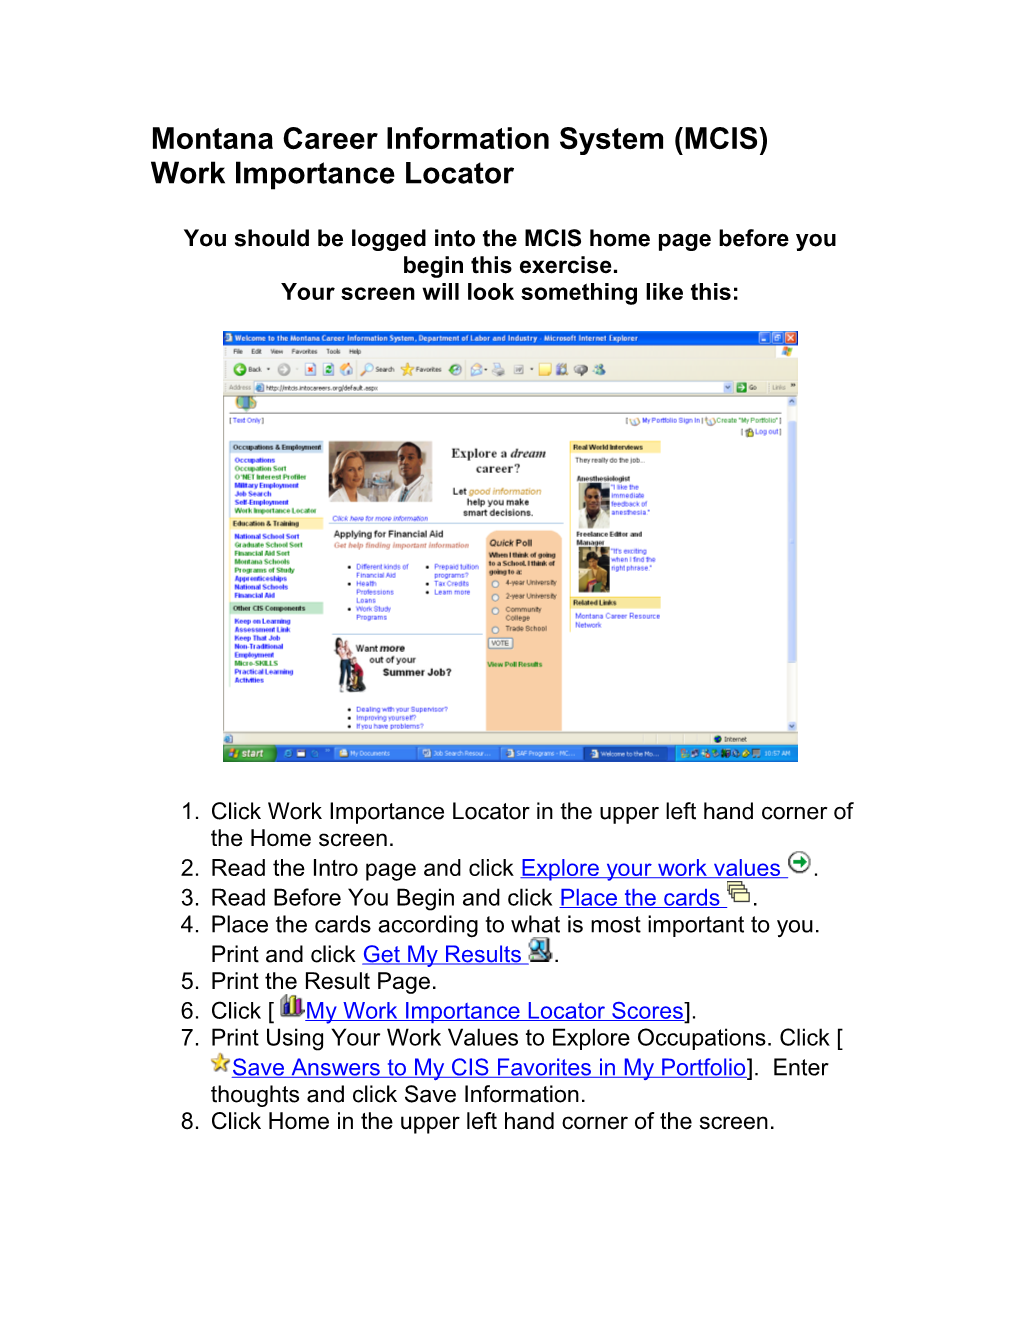 Work Importance Locator